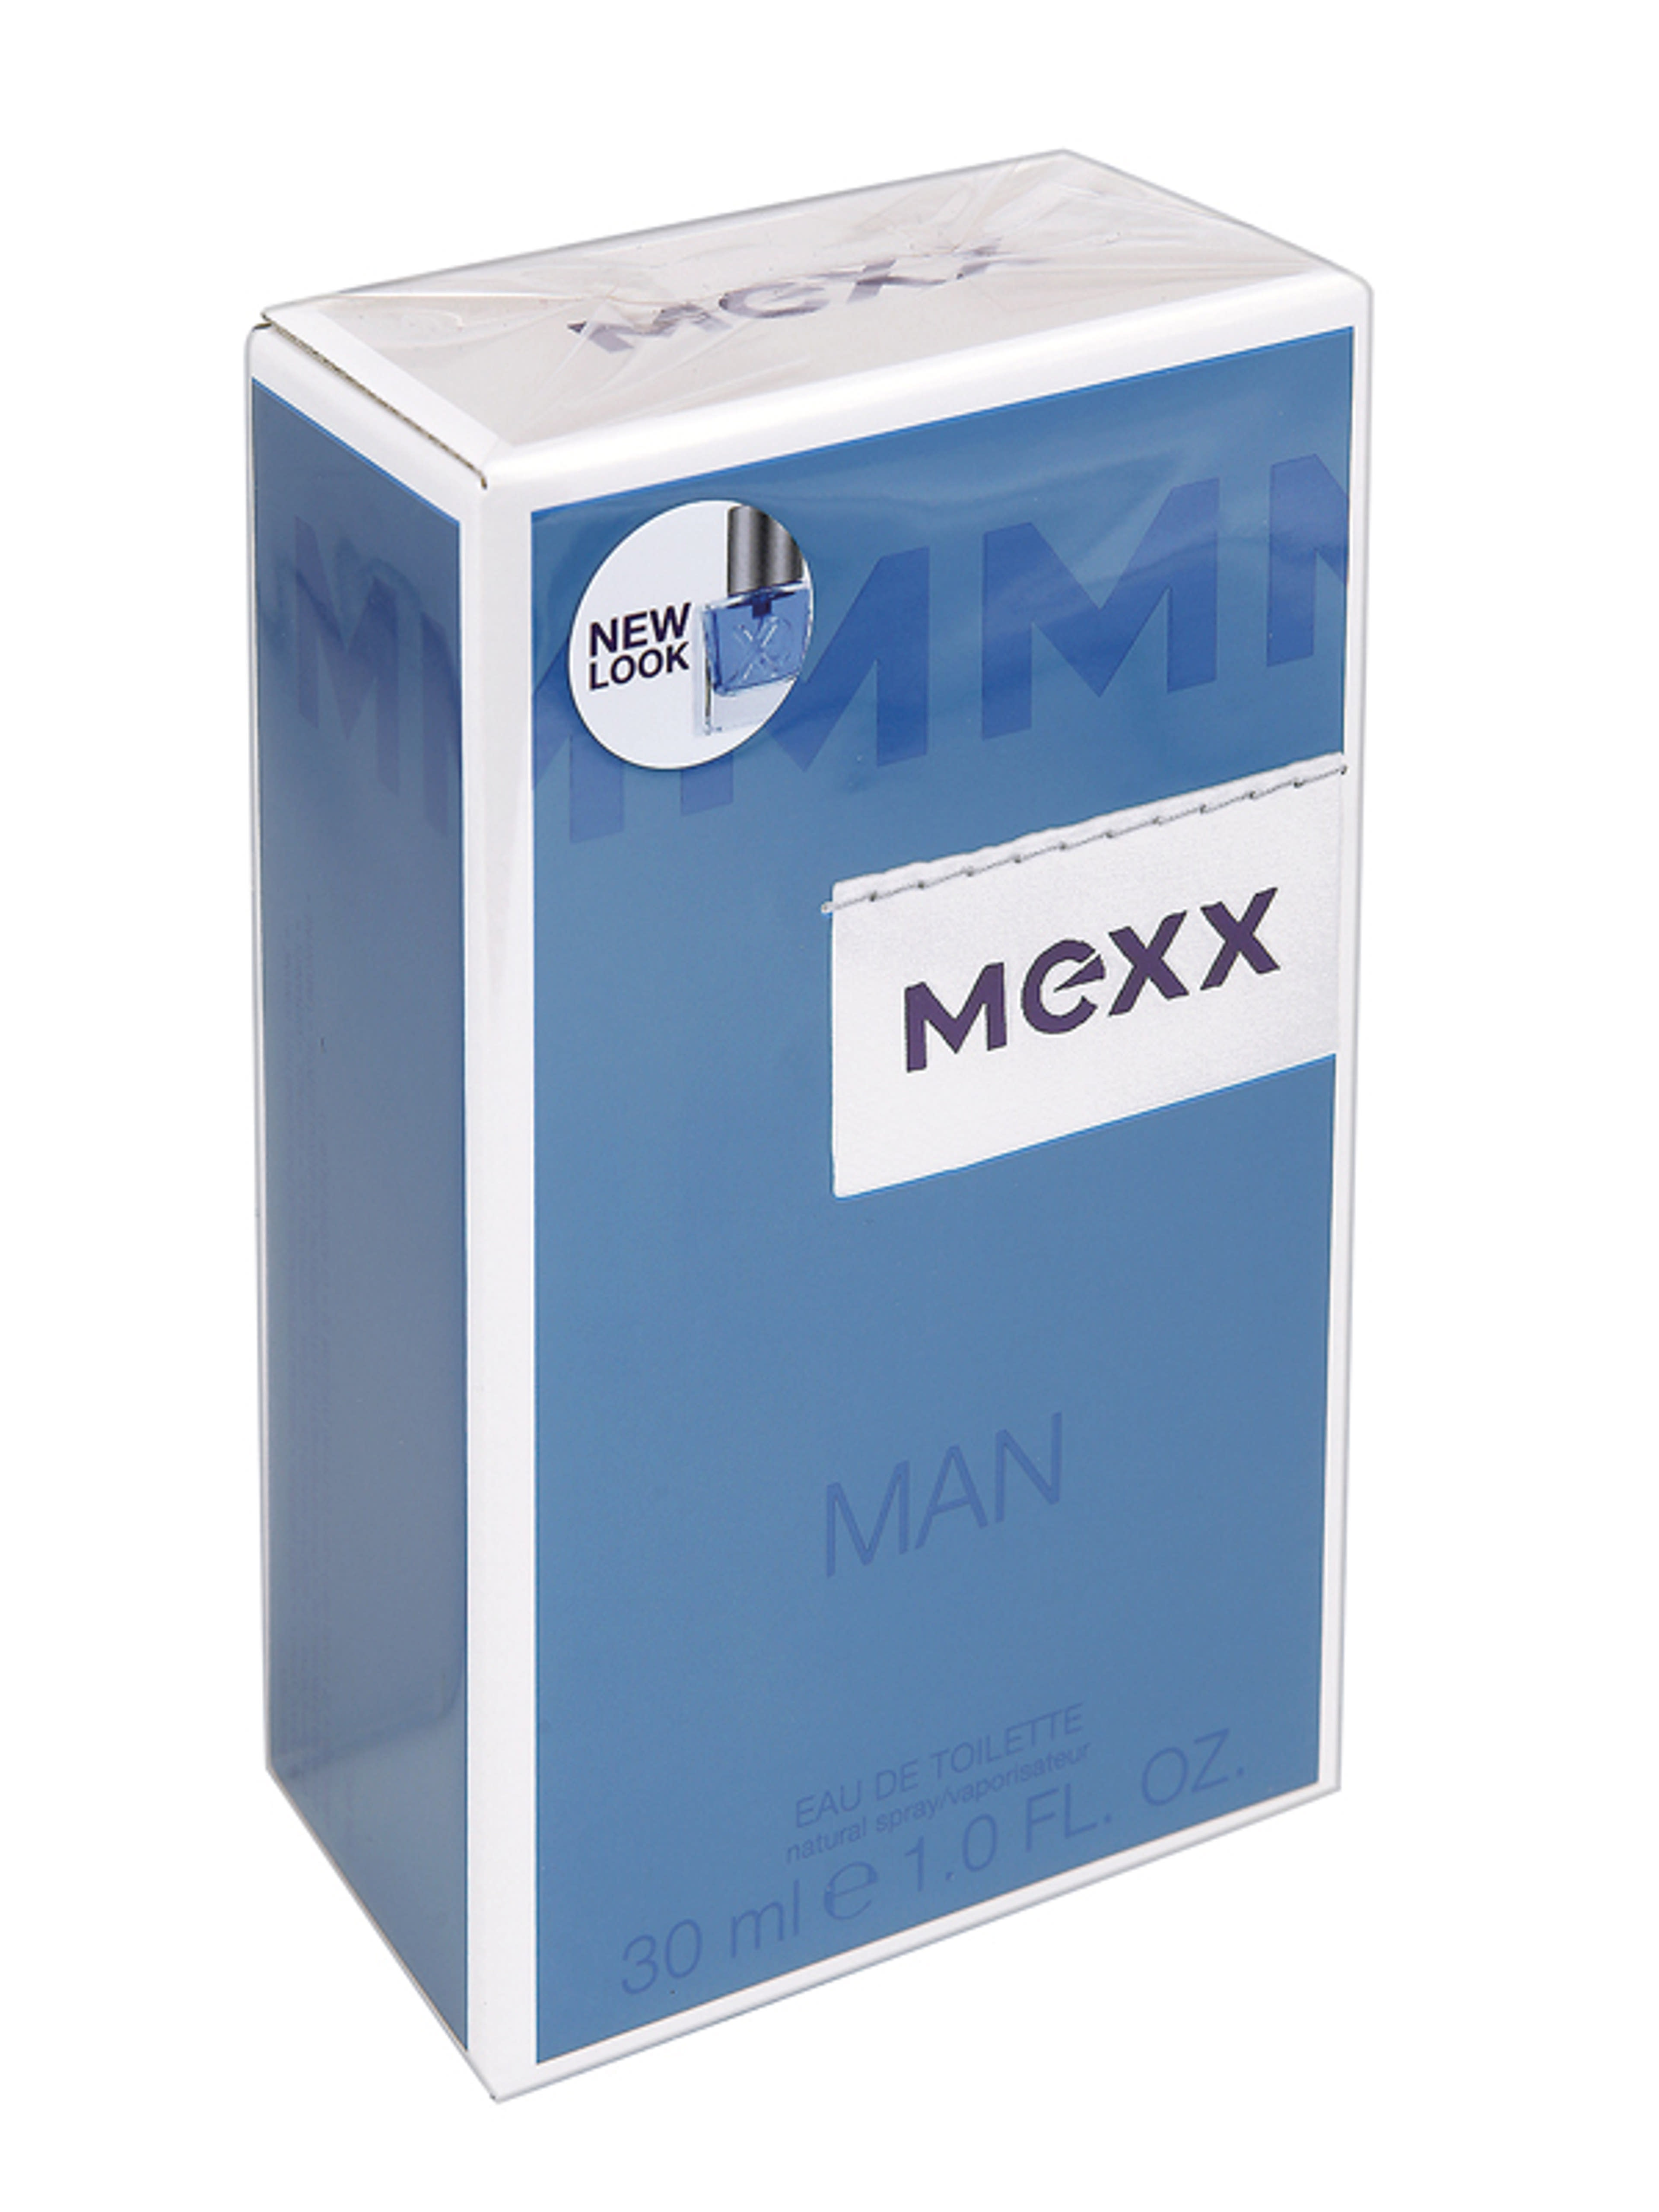 Mexx Man férfi Eau de Toilette - 30 ml